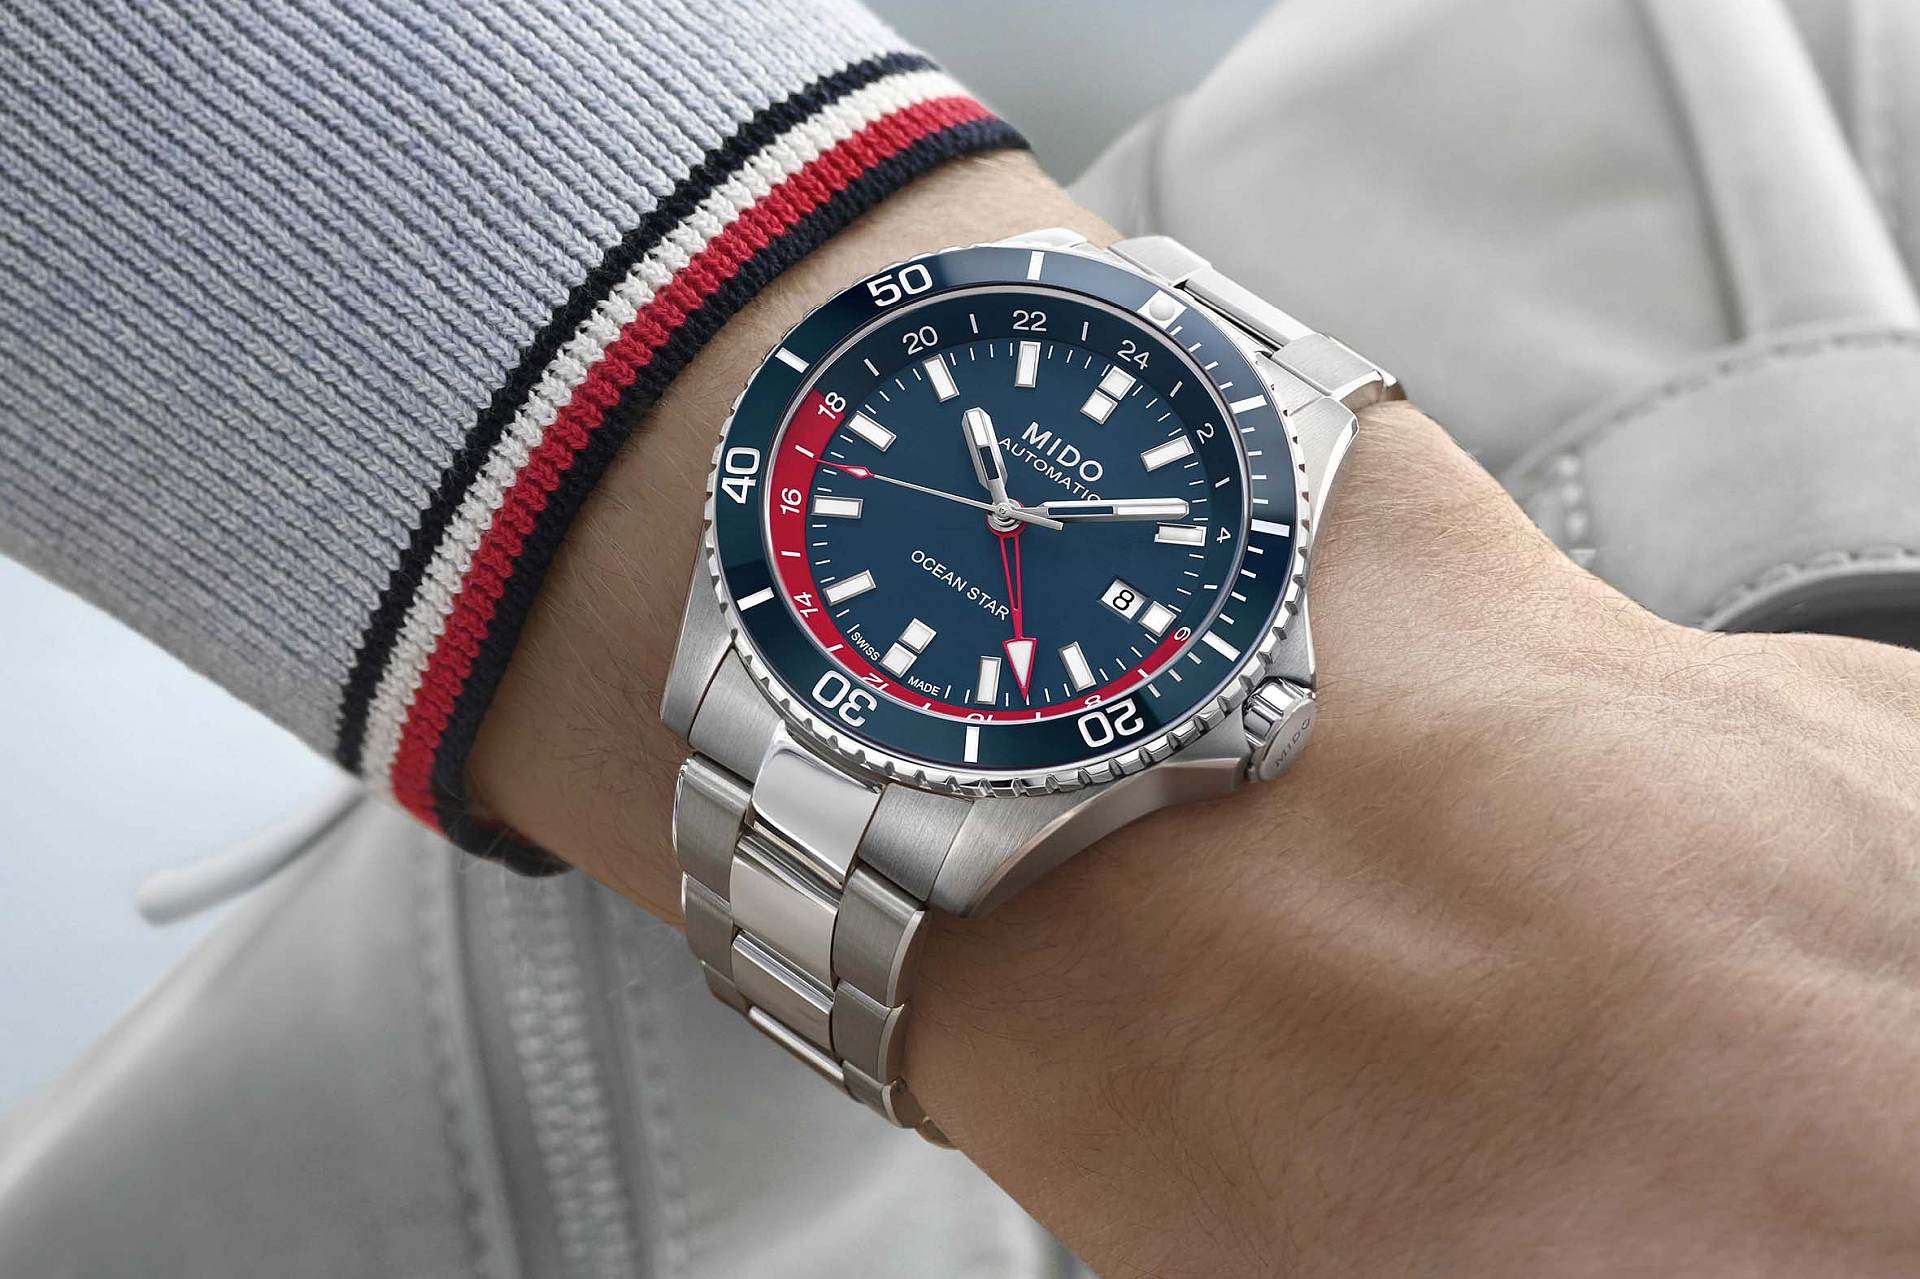  MIDO OCEAN STAR GMT海洋之星雙時區腕錶特別版